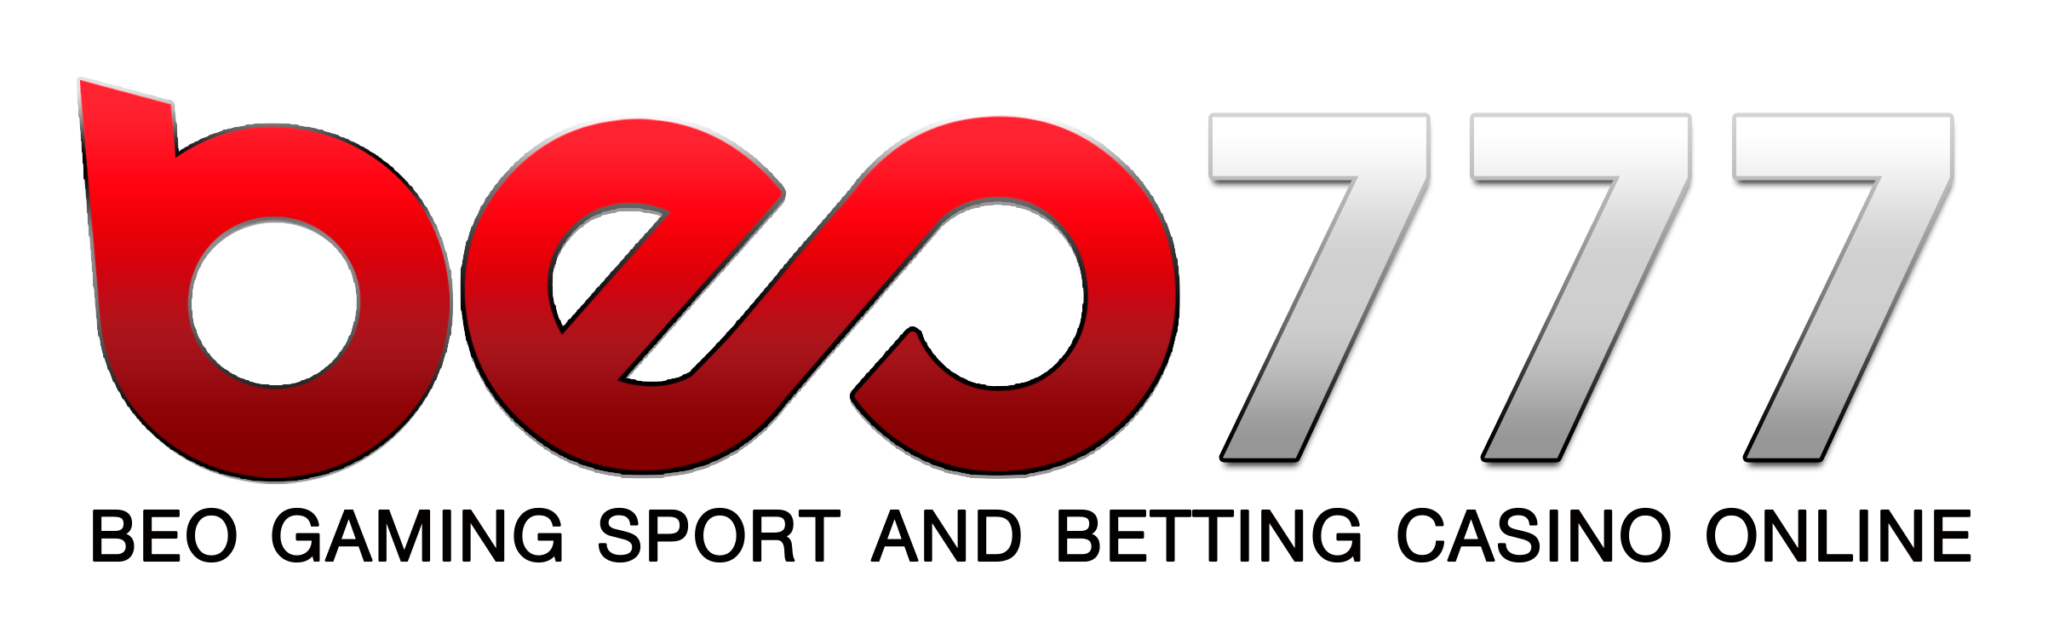 BEO777 logo